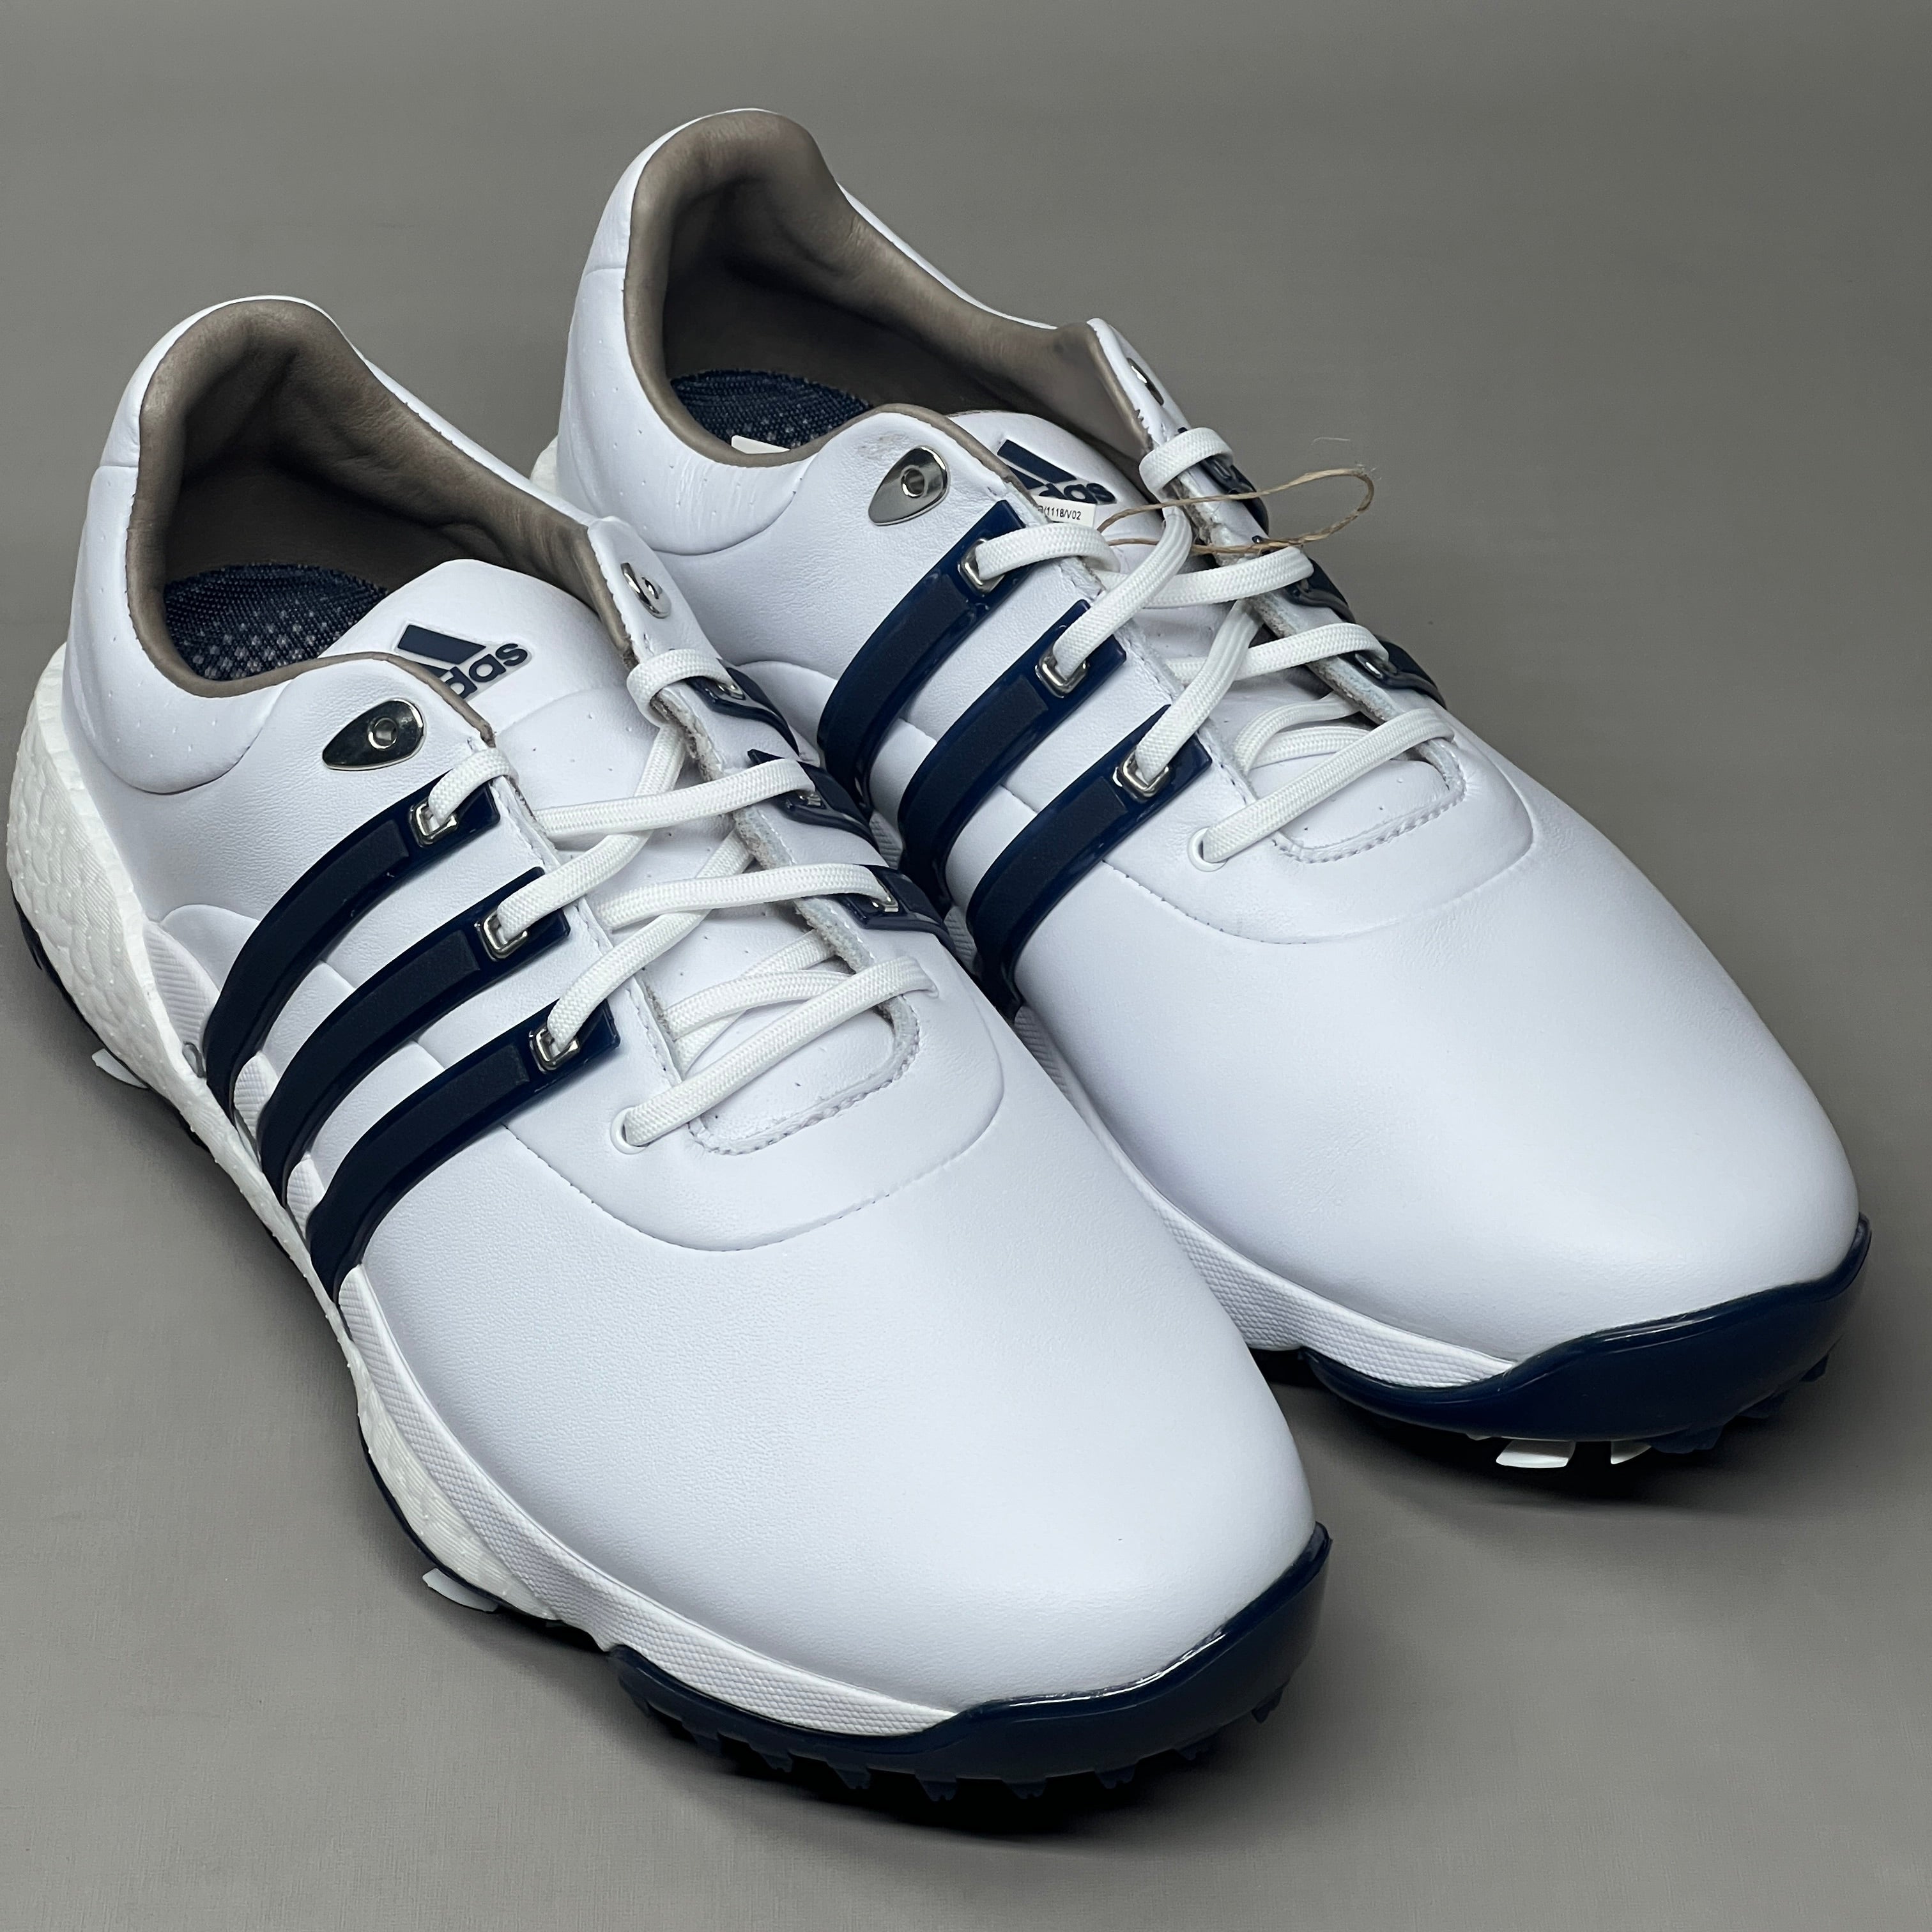 ADIDAS Golf Shoes TOUR360 22 Leather Men's White / Navy / – PayWut